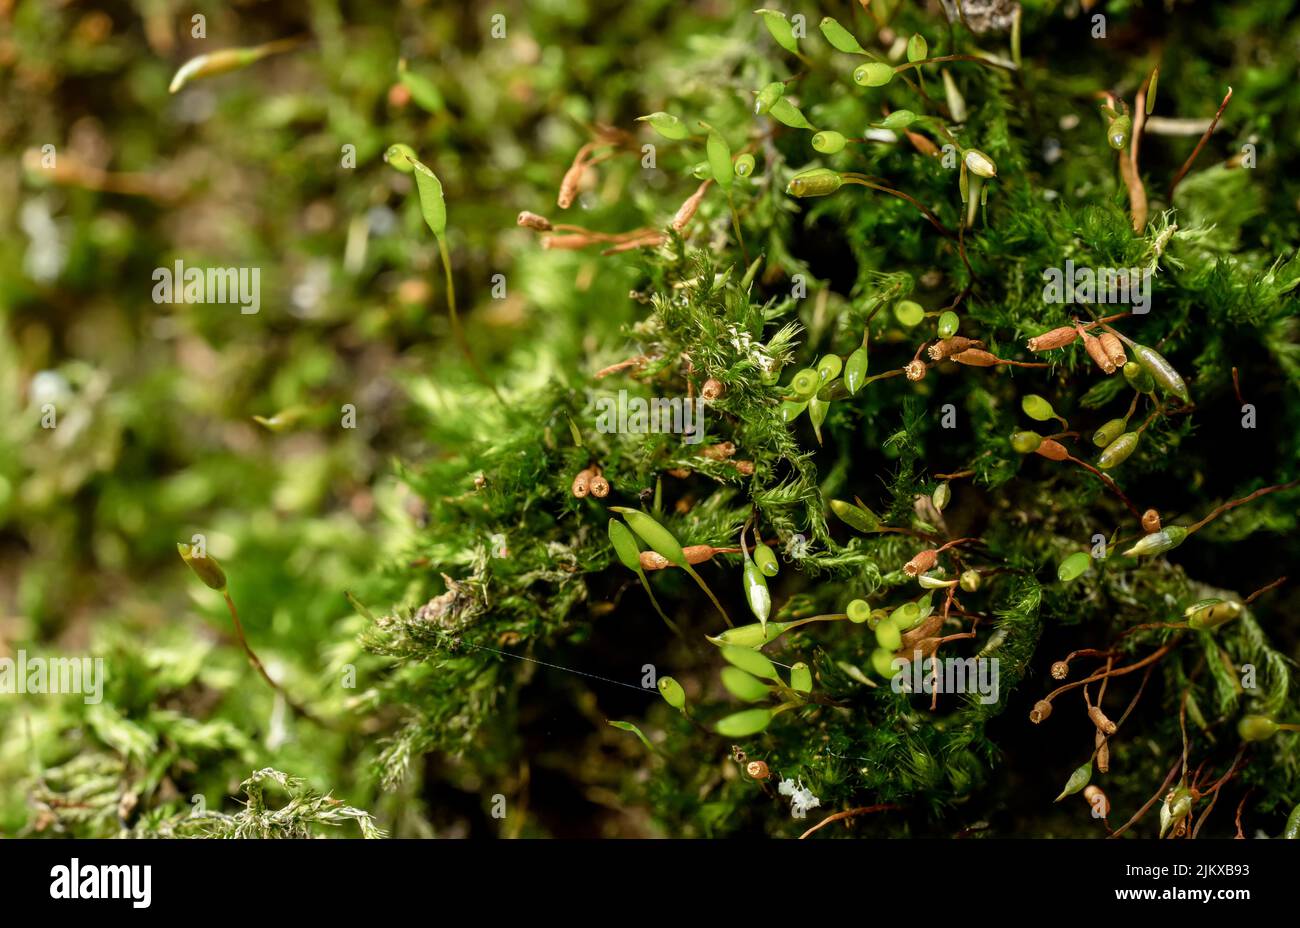 Fine green moss growing on tree Stock Photo